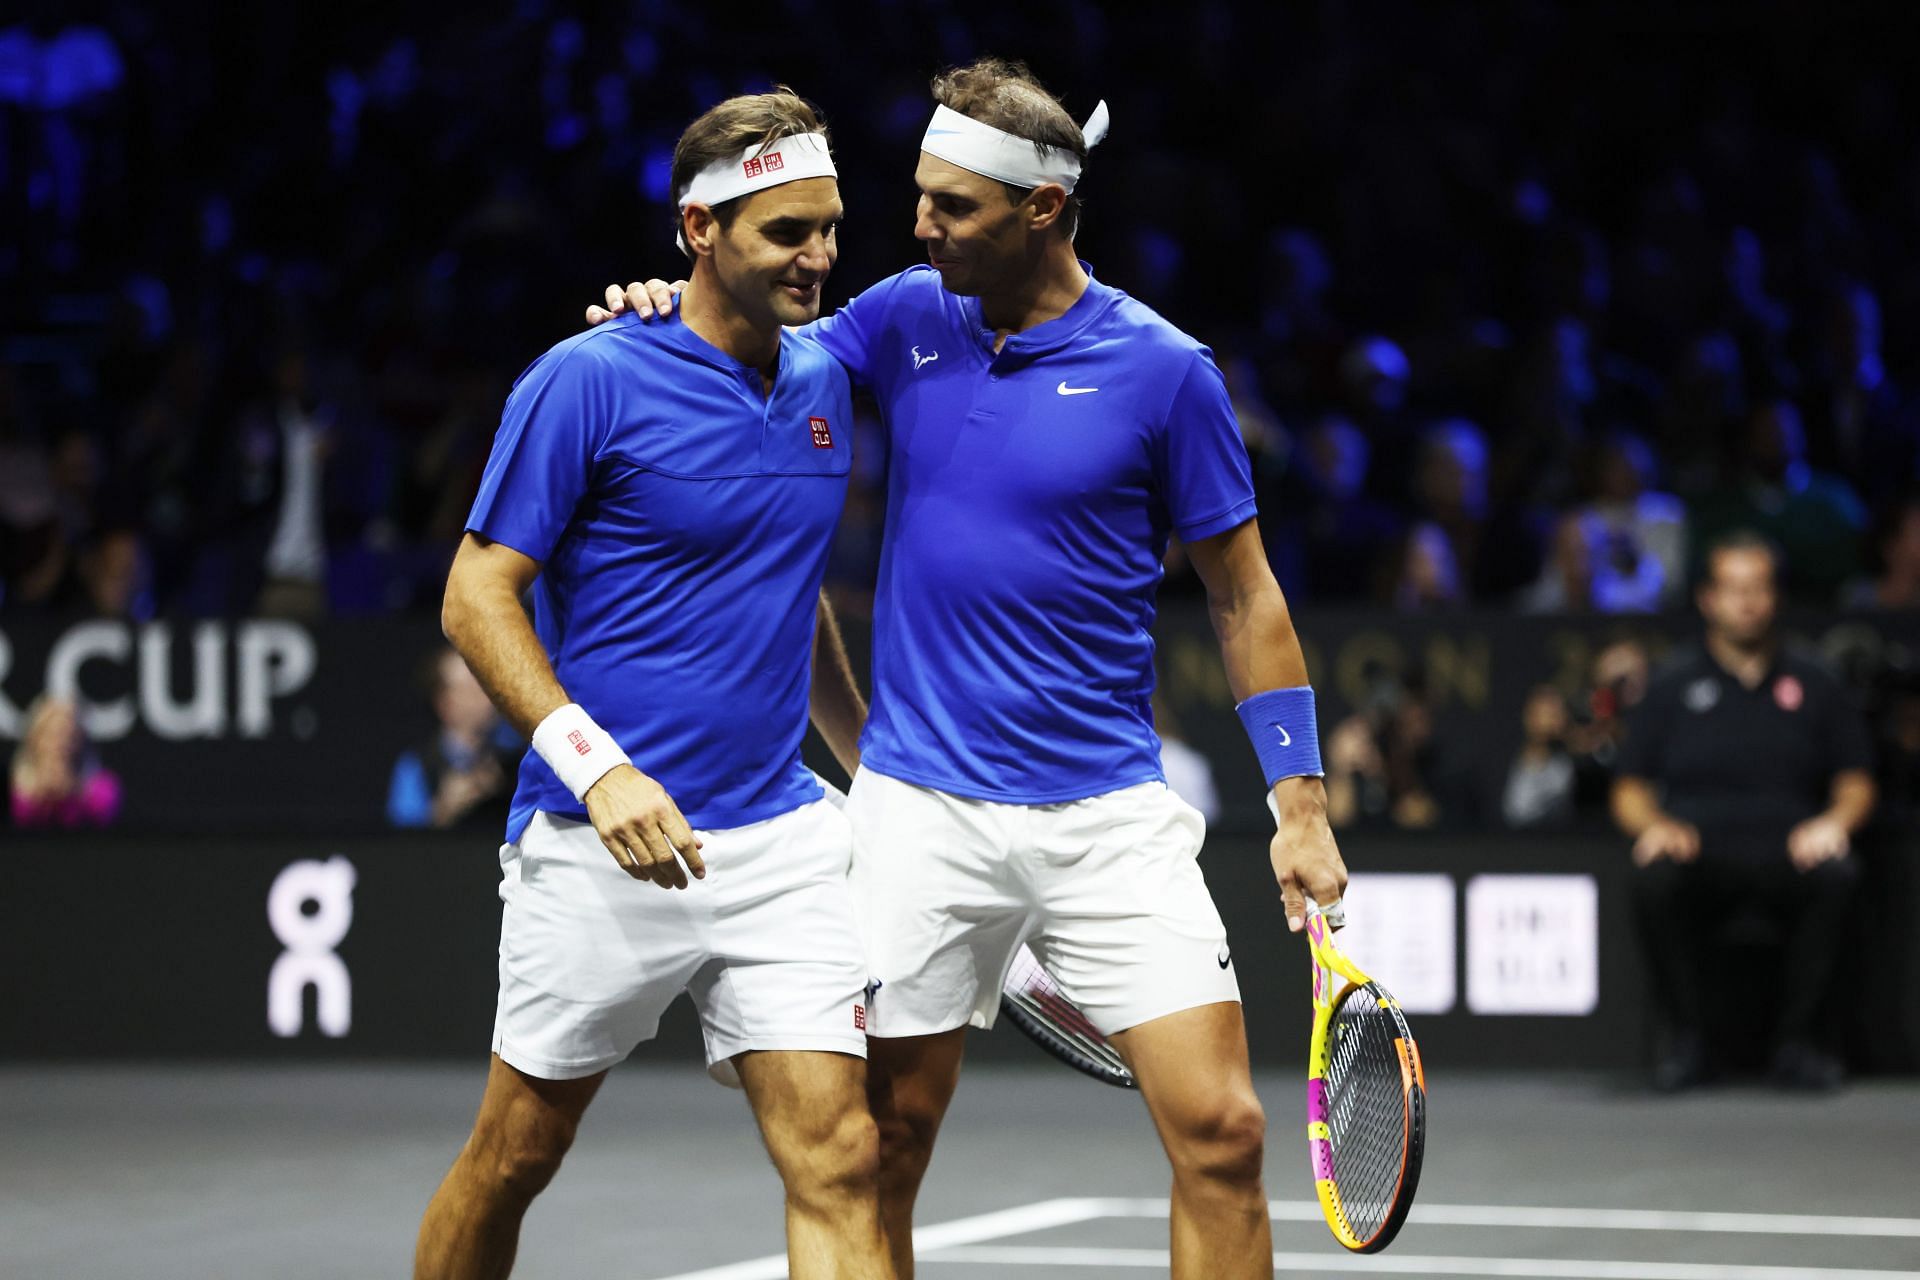 Asif Kapadia's Roger Federer film will be a monumental sports